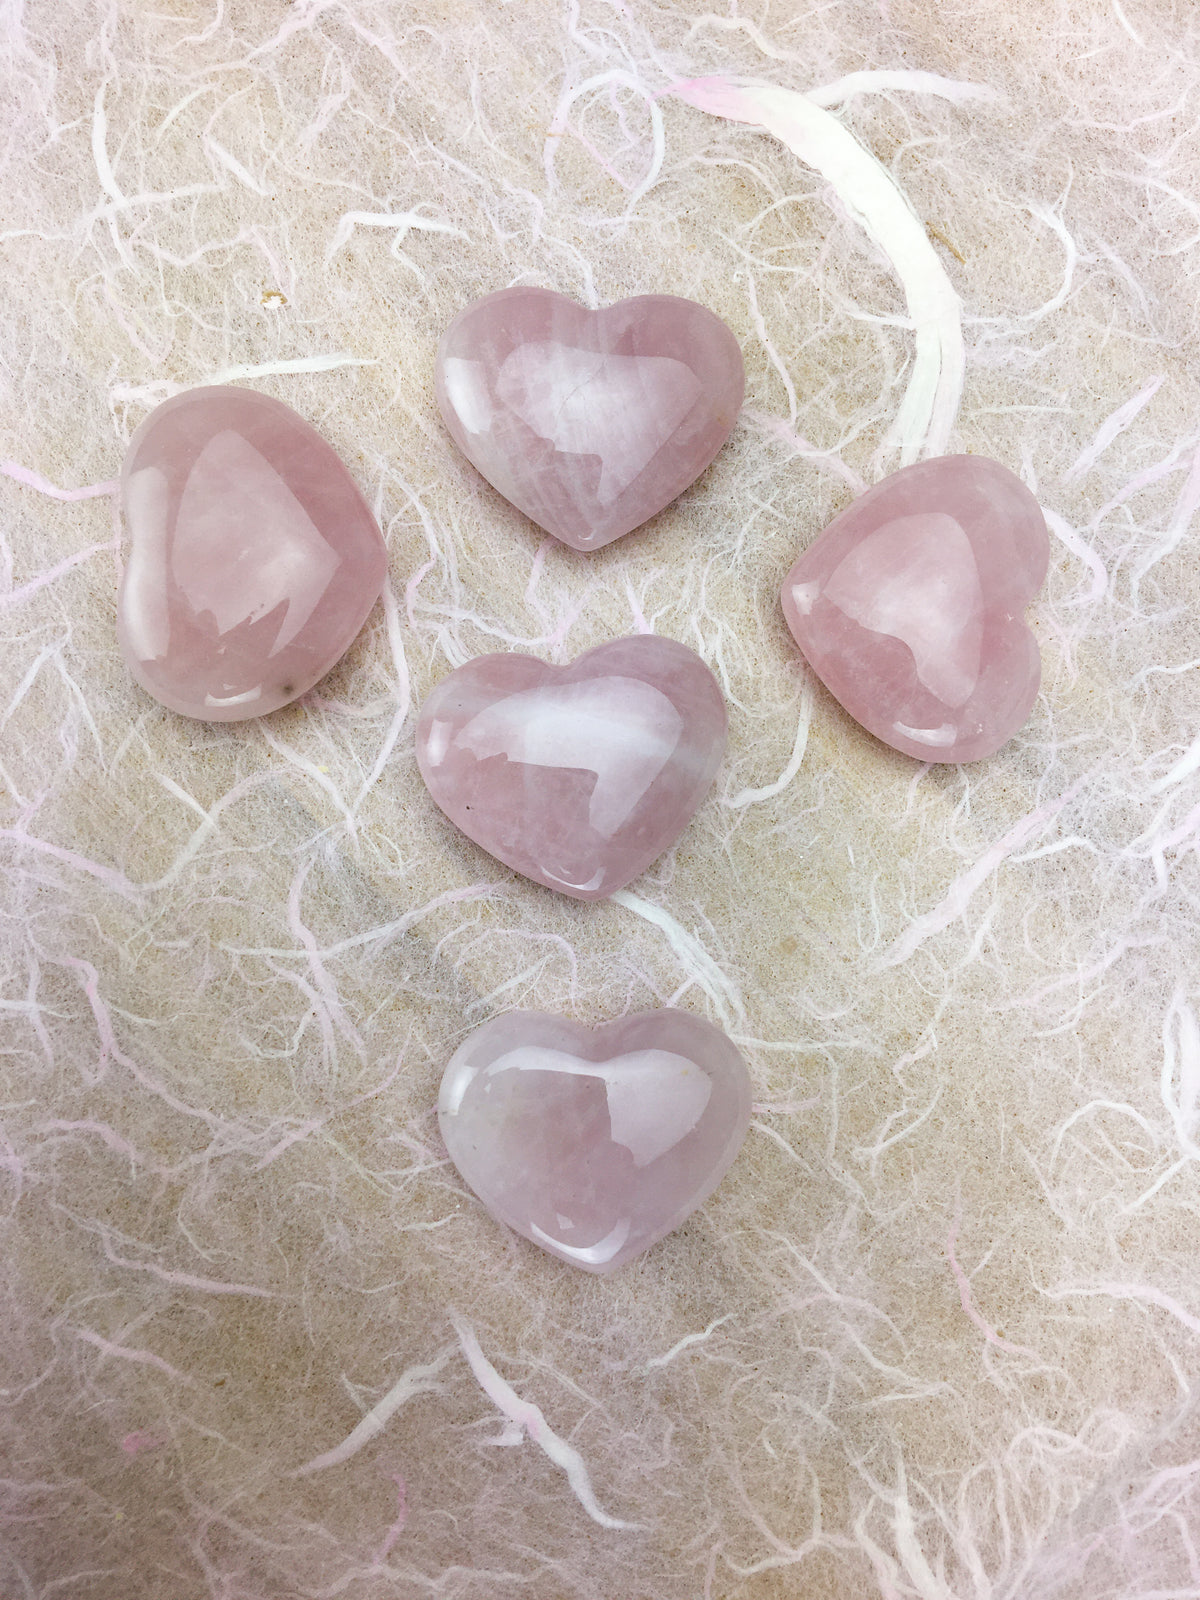 five rose quartz hearts on a  white gauze background